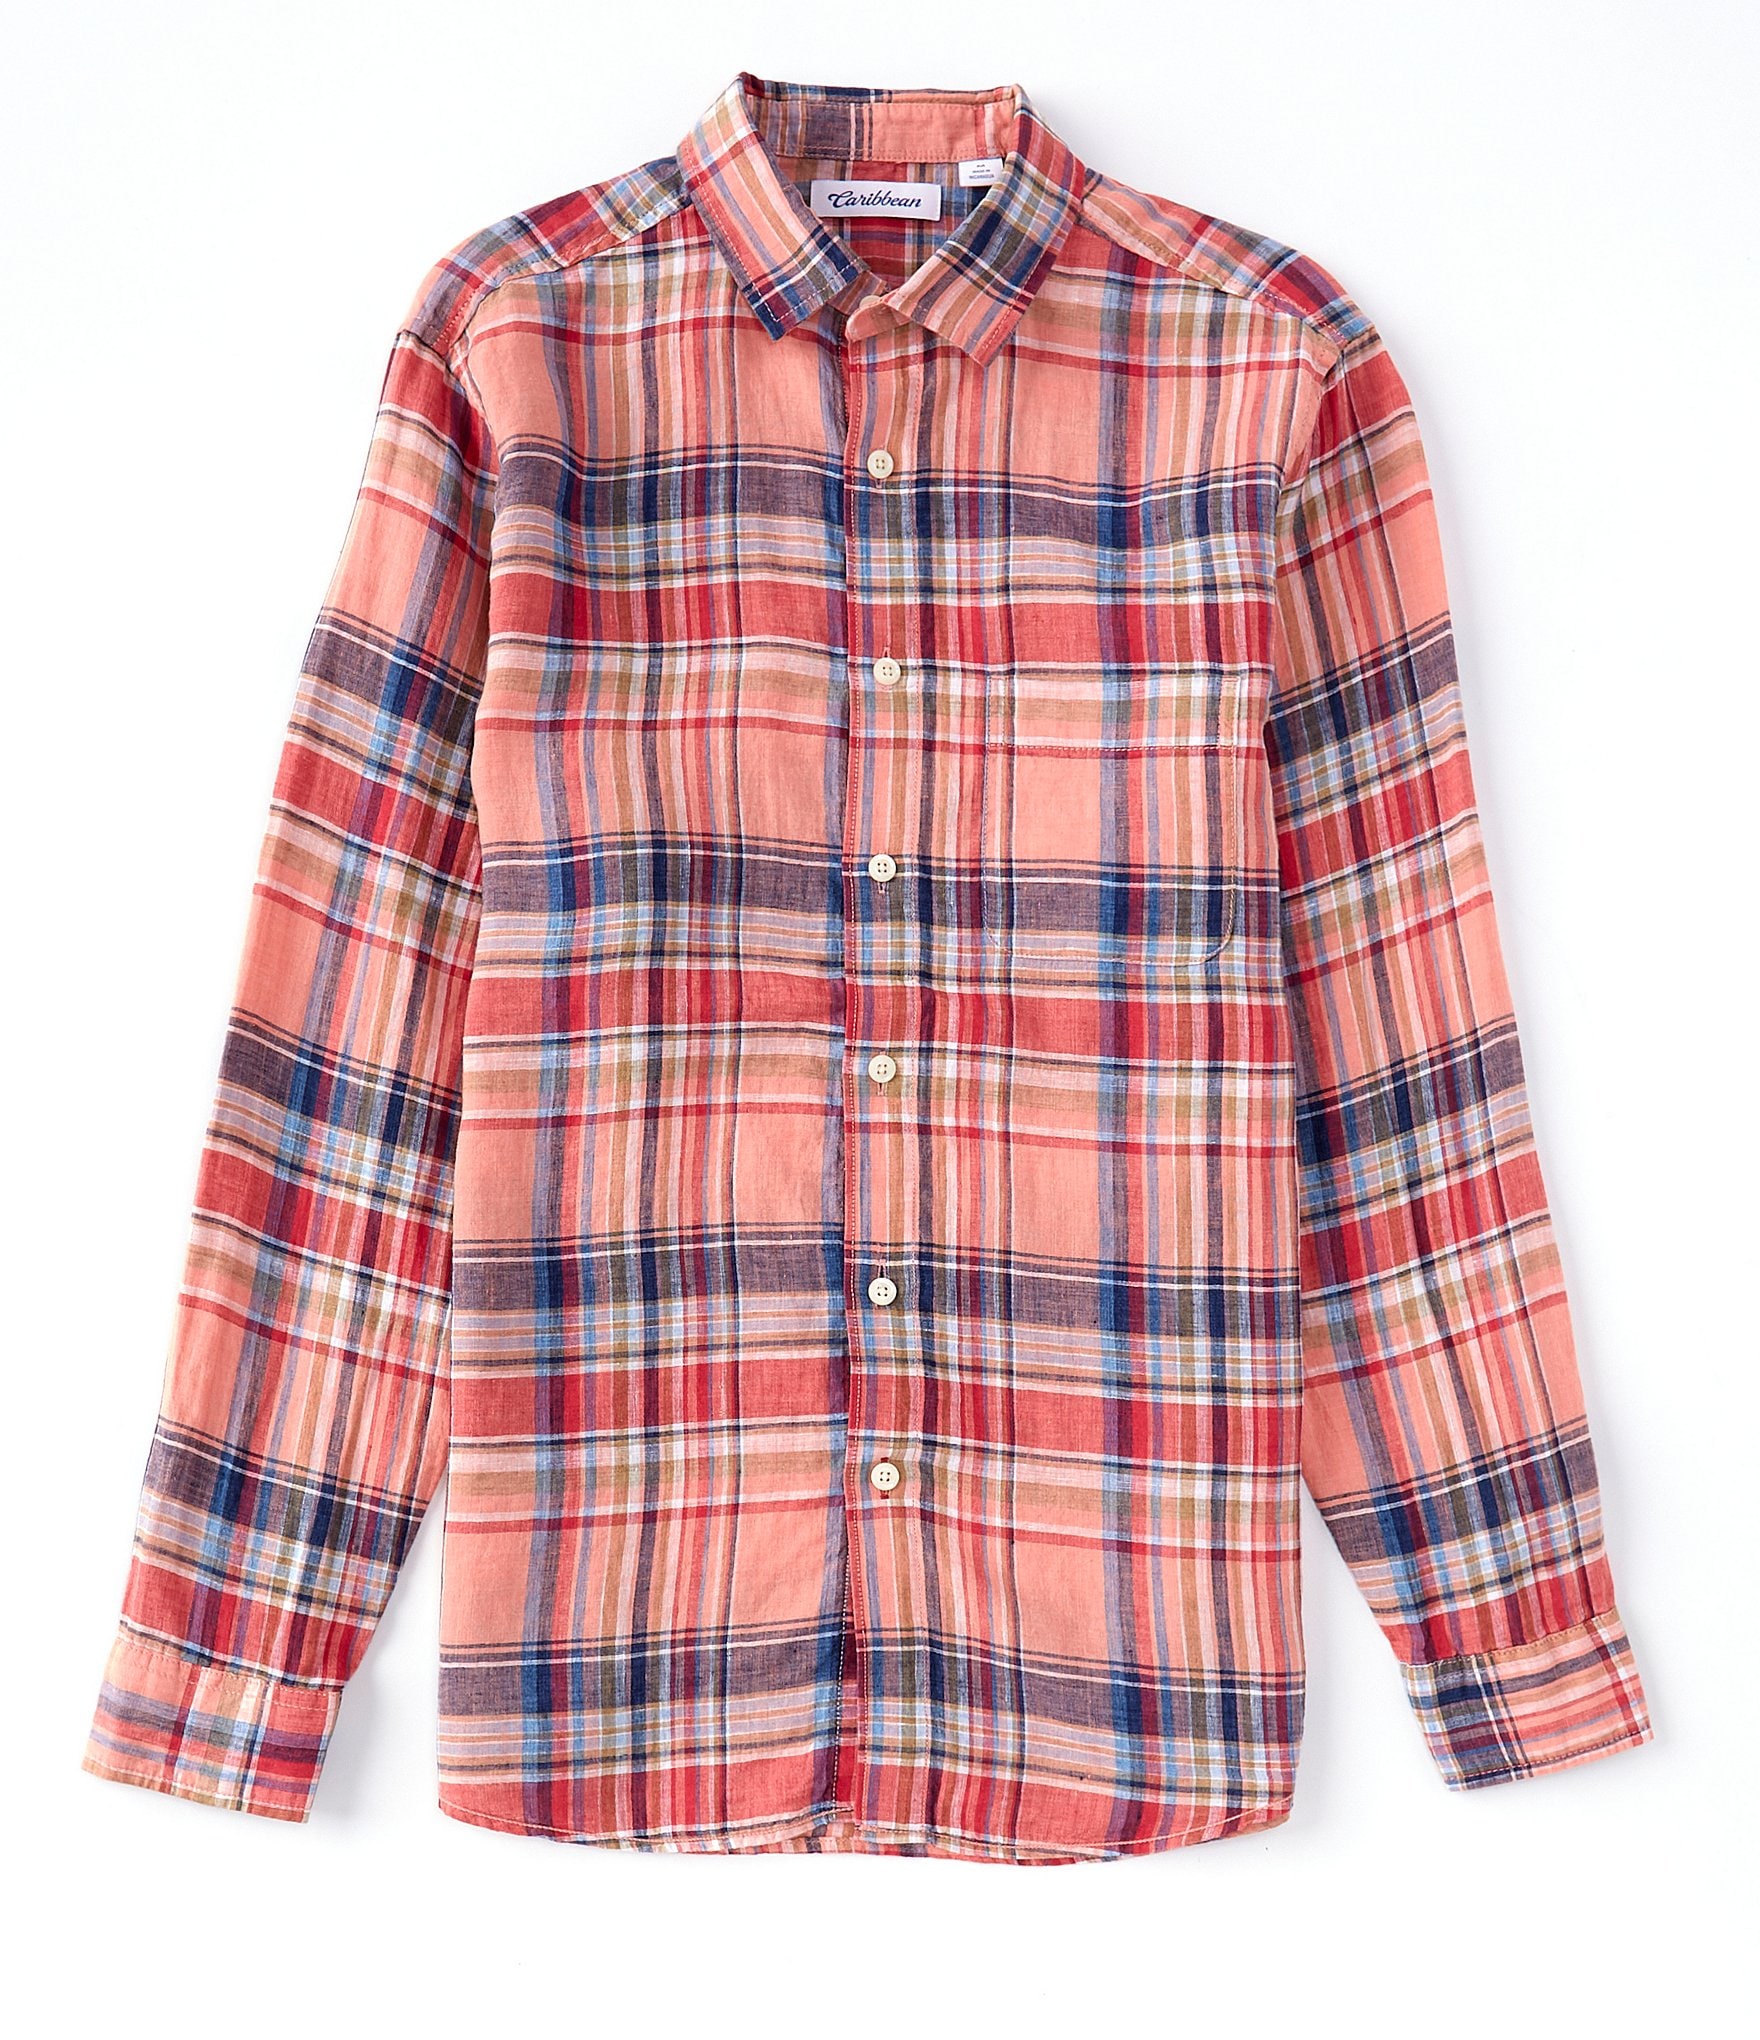 Men's Casual Button-Up Shirts | Dillard's